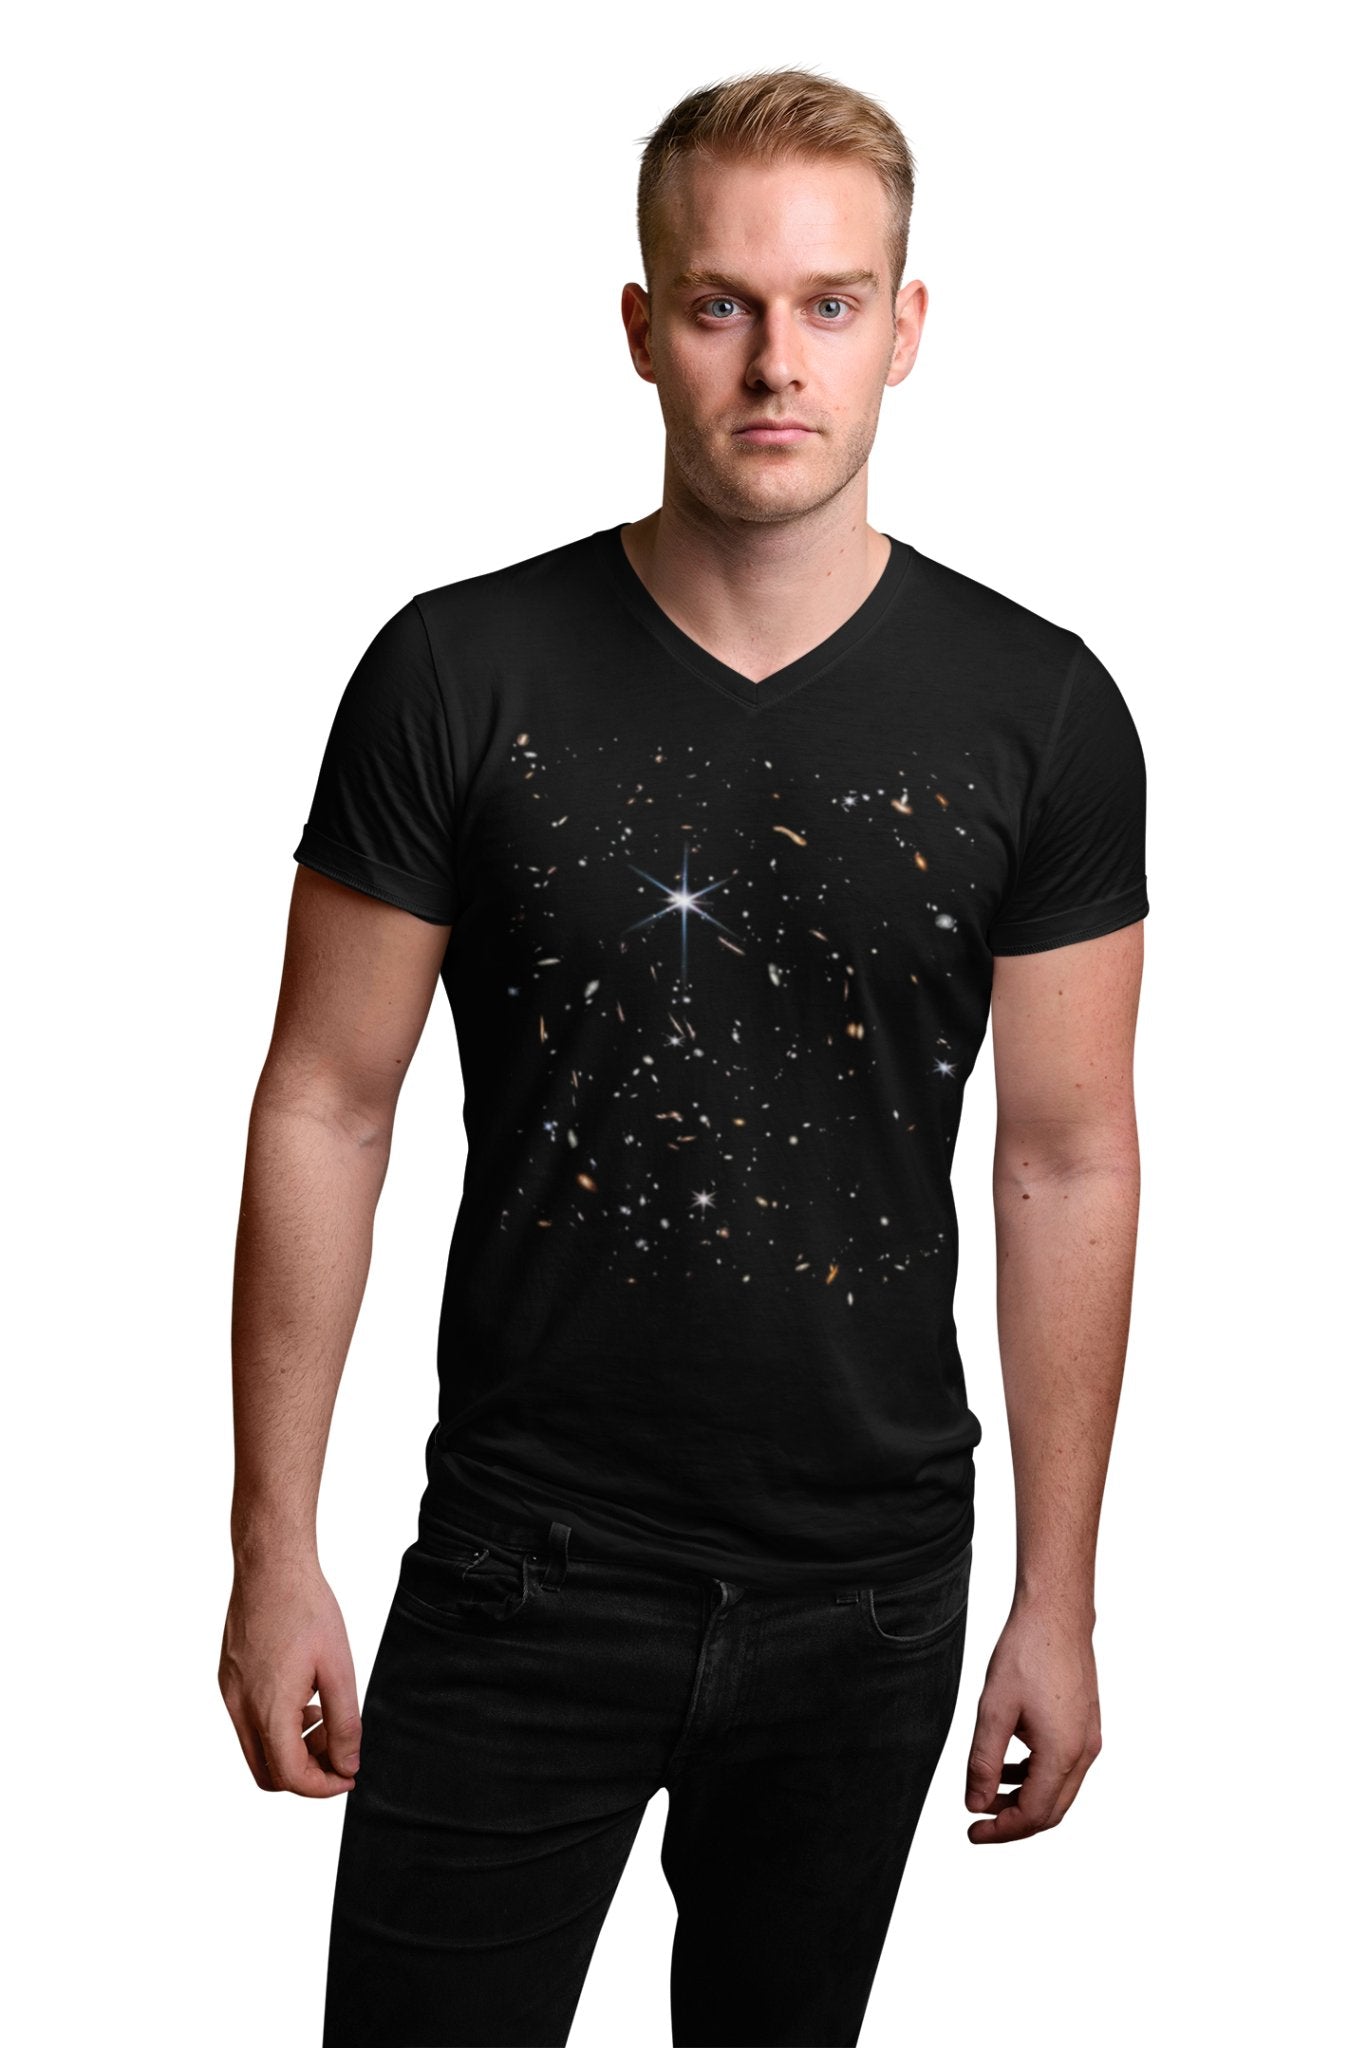 Galaxy Tee - Wow T-Shirts